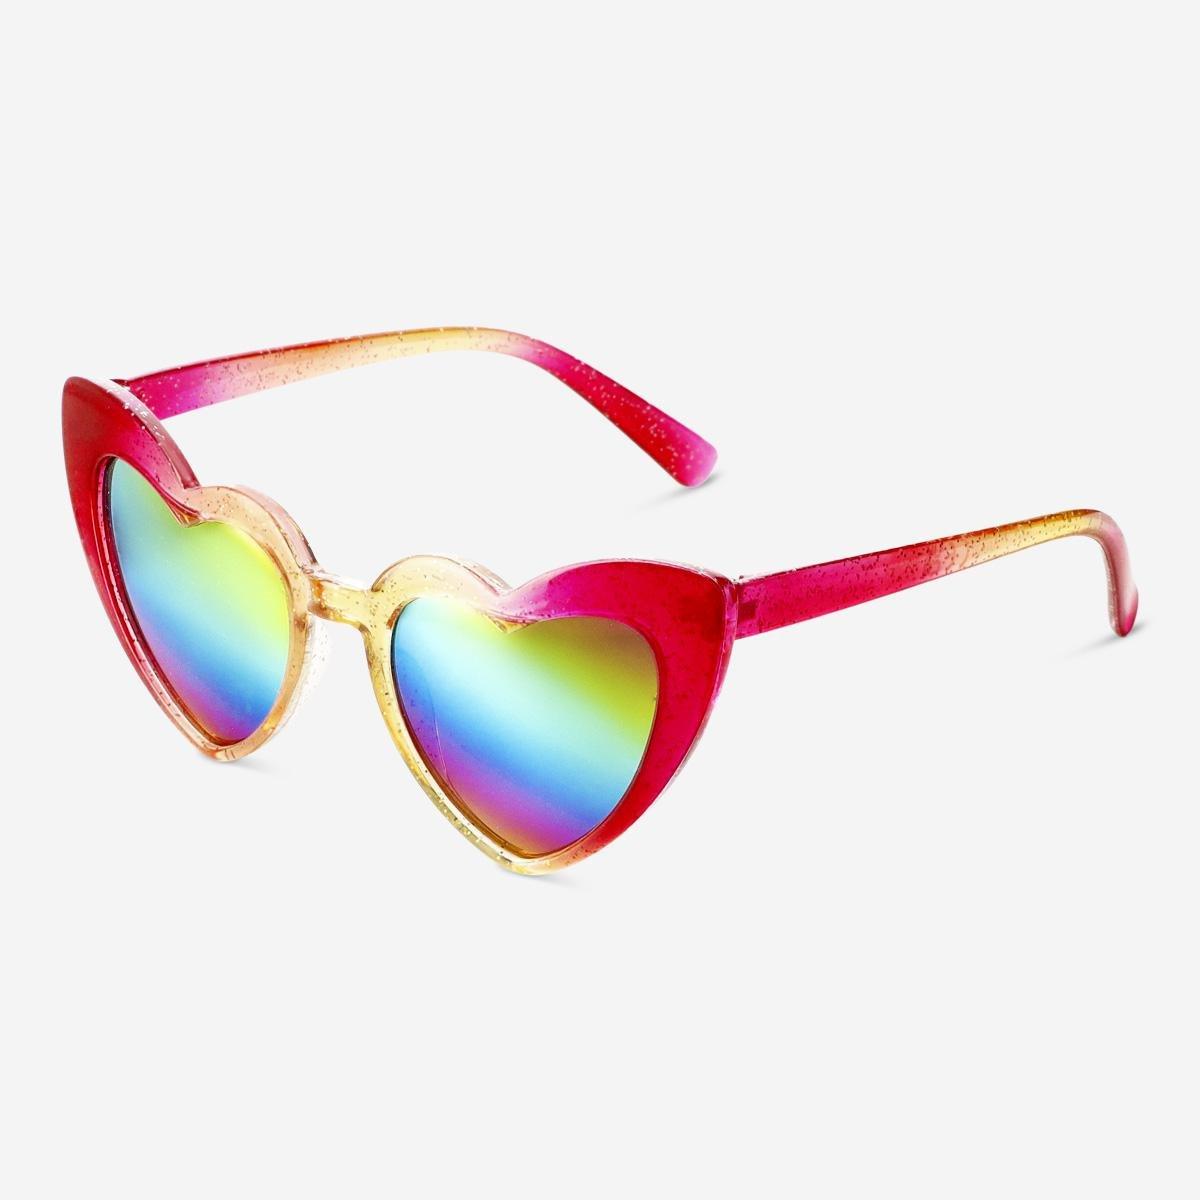 Multicolour sunglasses, kids